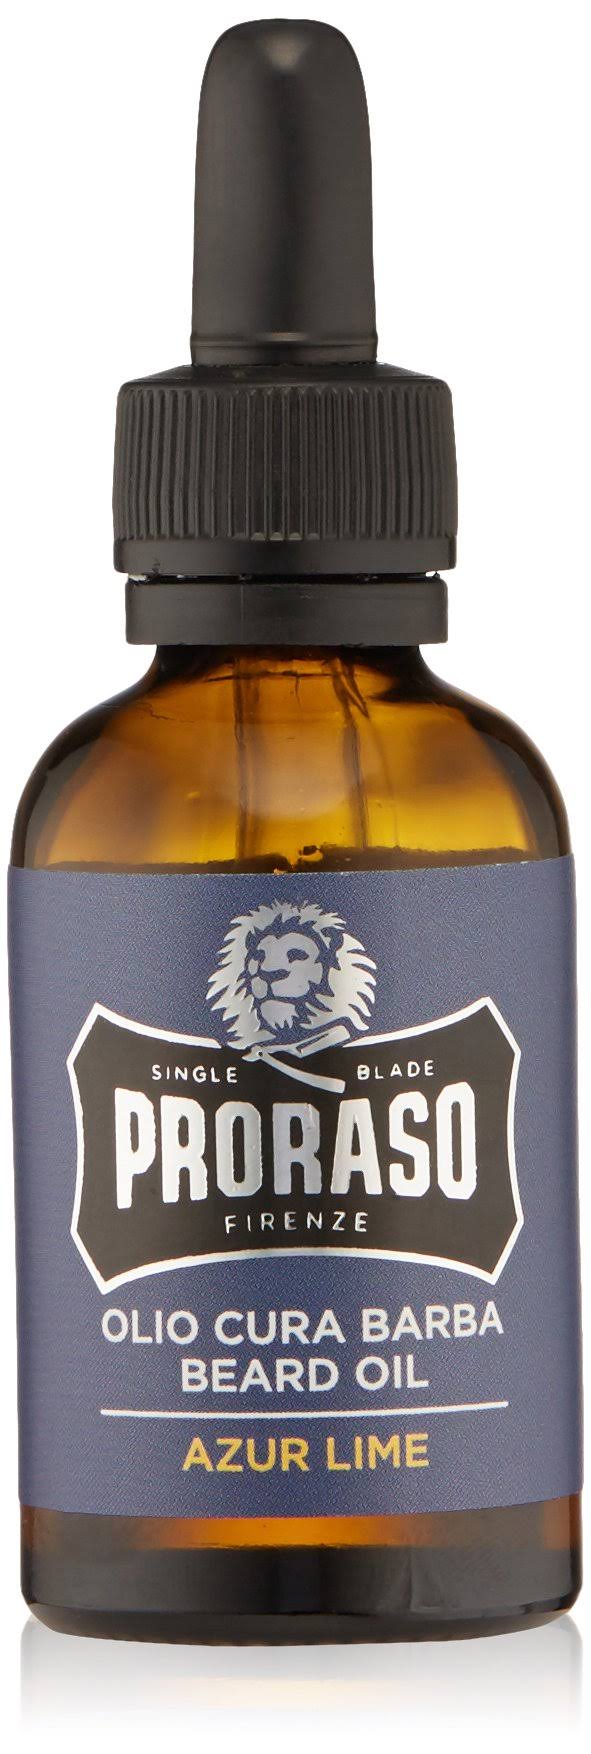 Proraso Single Blade Azur Lime Beard Oil - 30ml